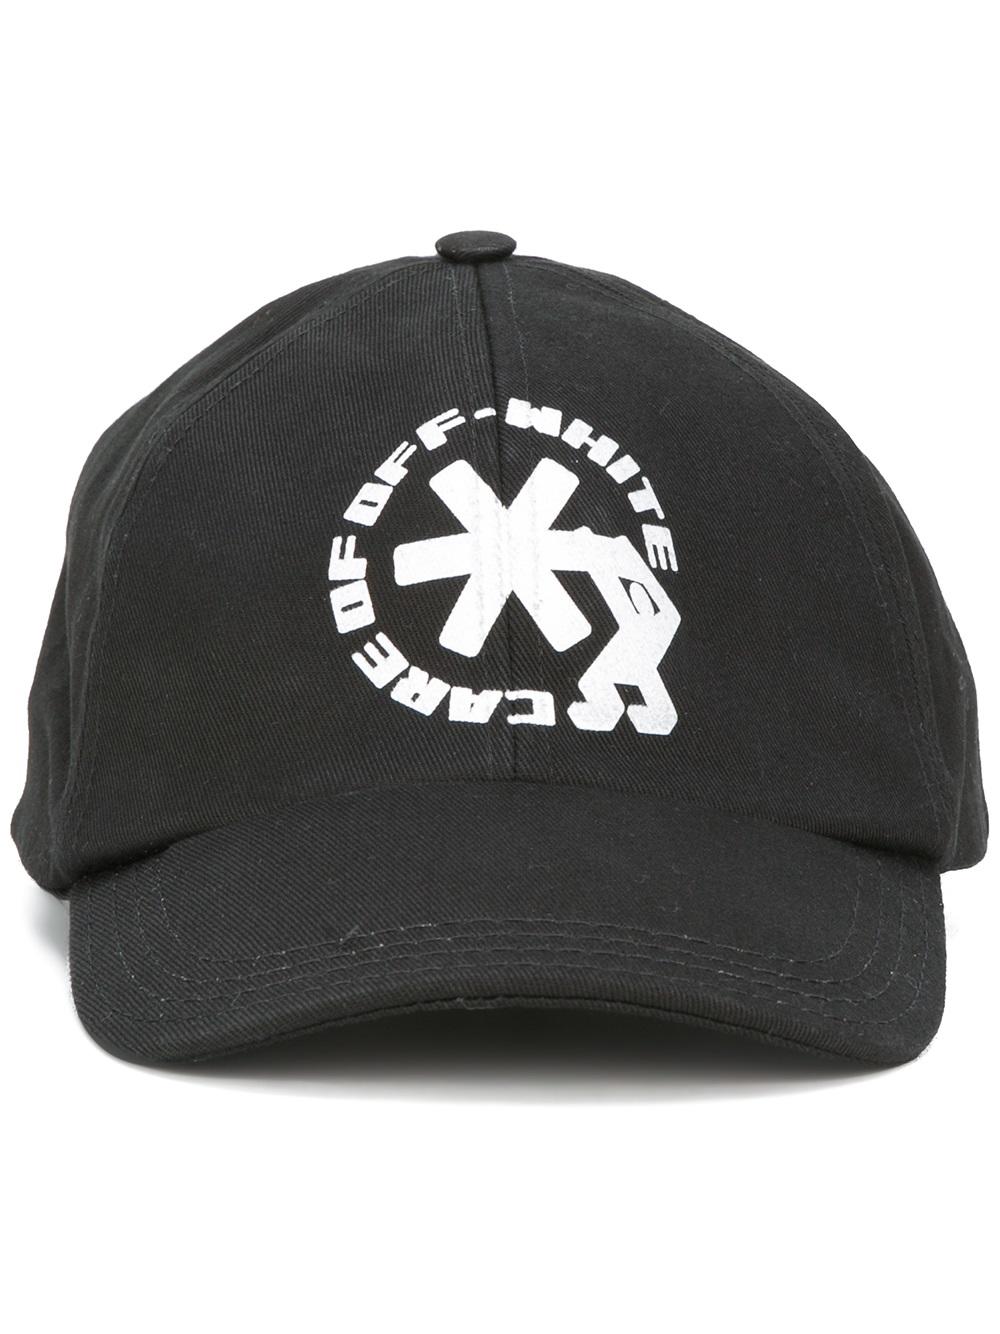 Off-White logo print cap 1001 BLACK WHITE Men Accessories Hats